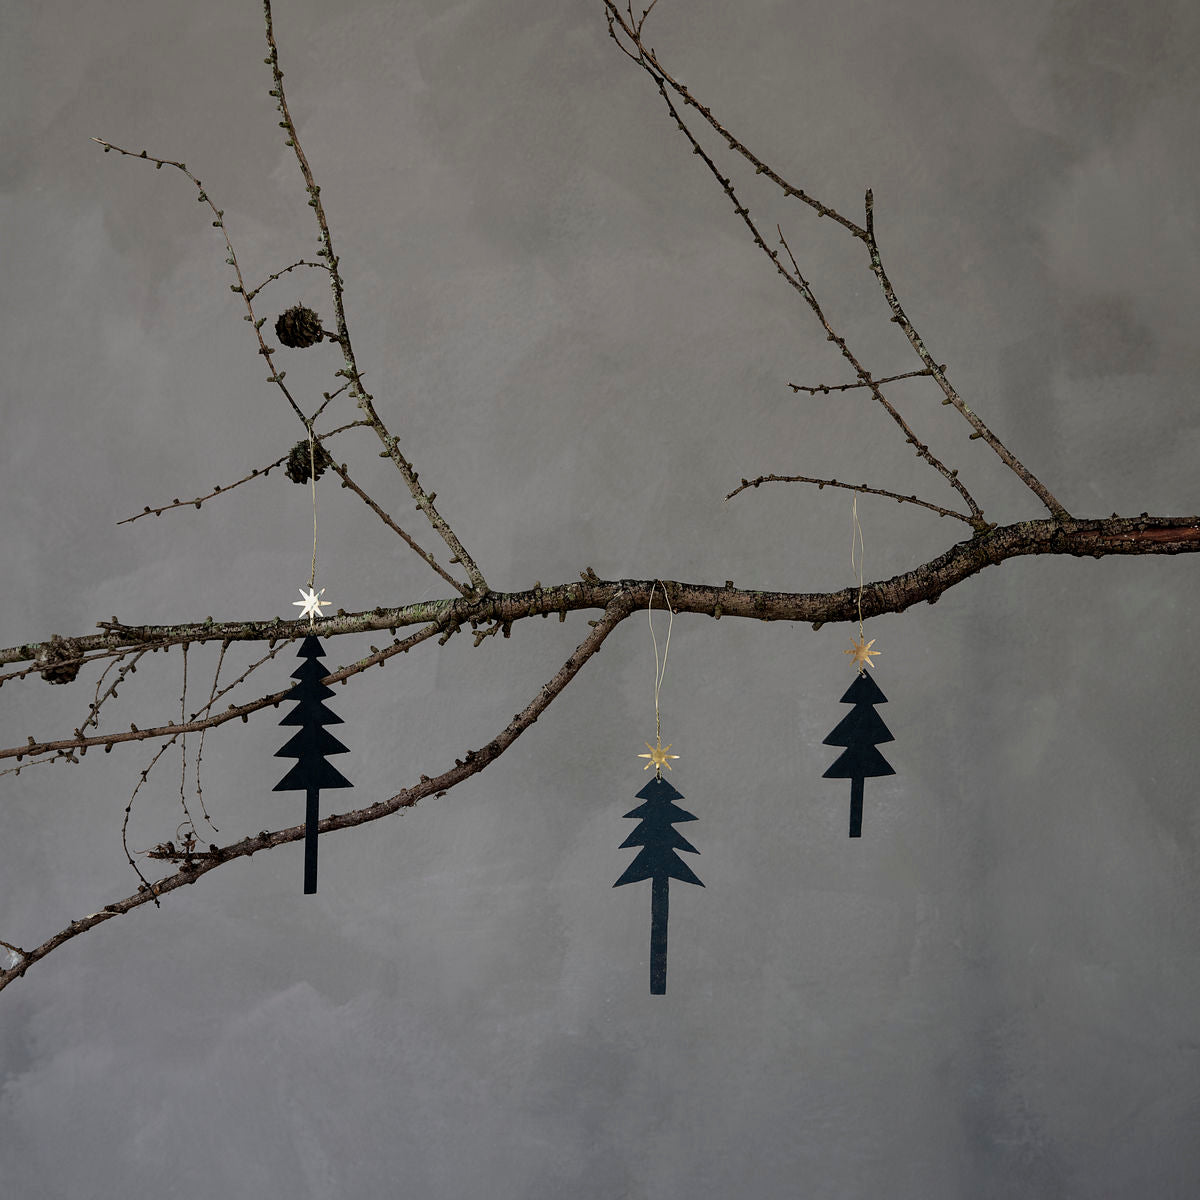 Black Tree Ornament with Gold Star | Set of 3 - Lifestory